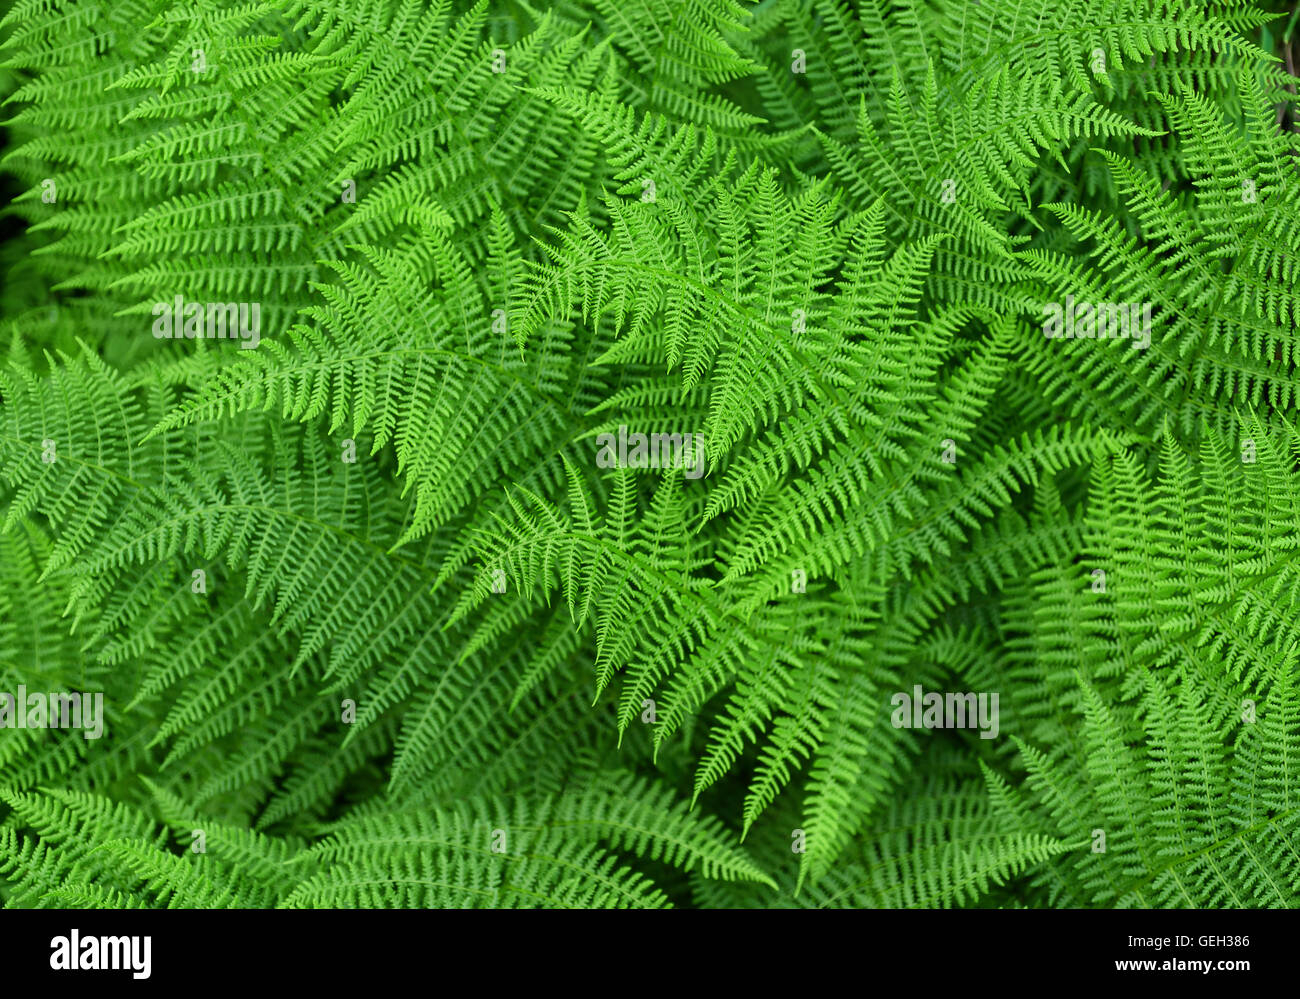 Green fresh fern background Stock Photo